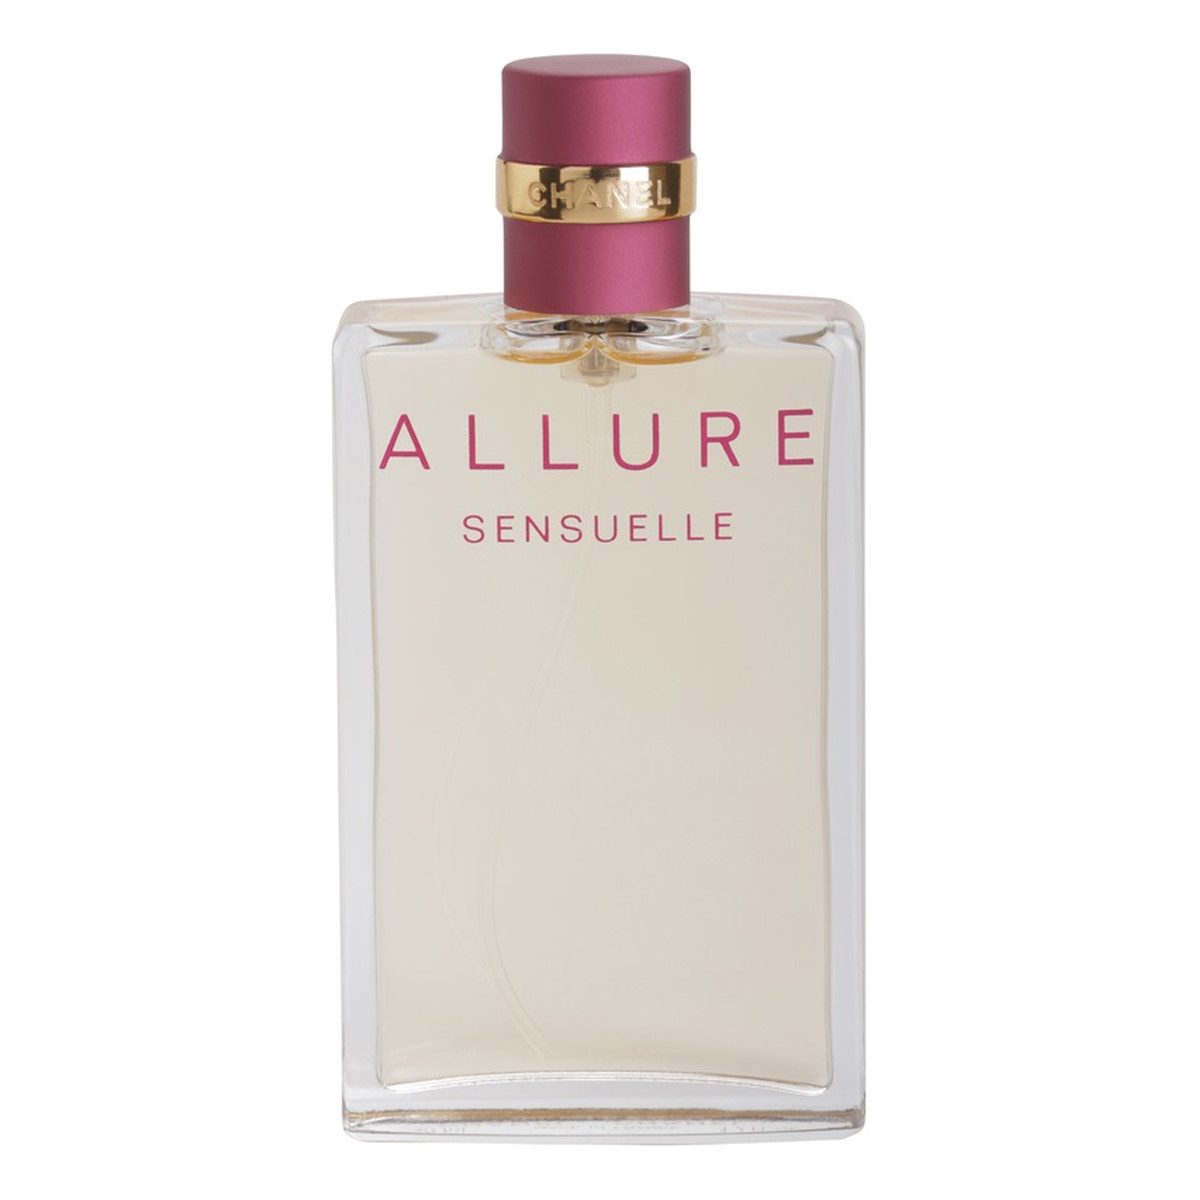 Chanel Allure Sensuelle woda perfumowana dla kobiet 50ml